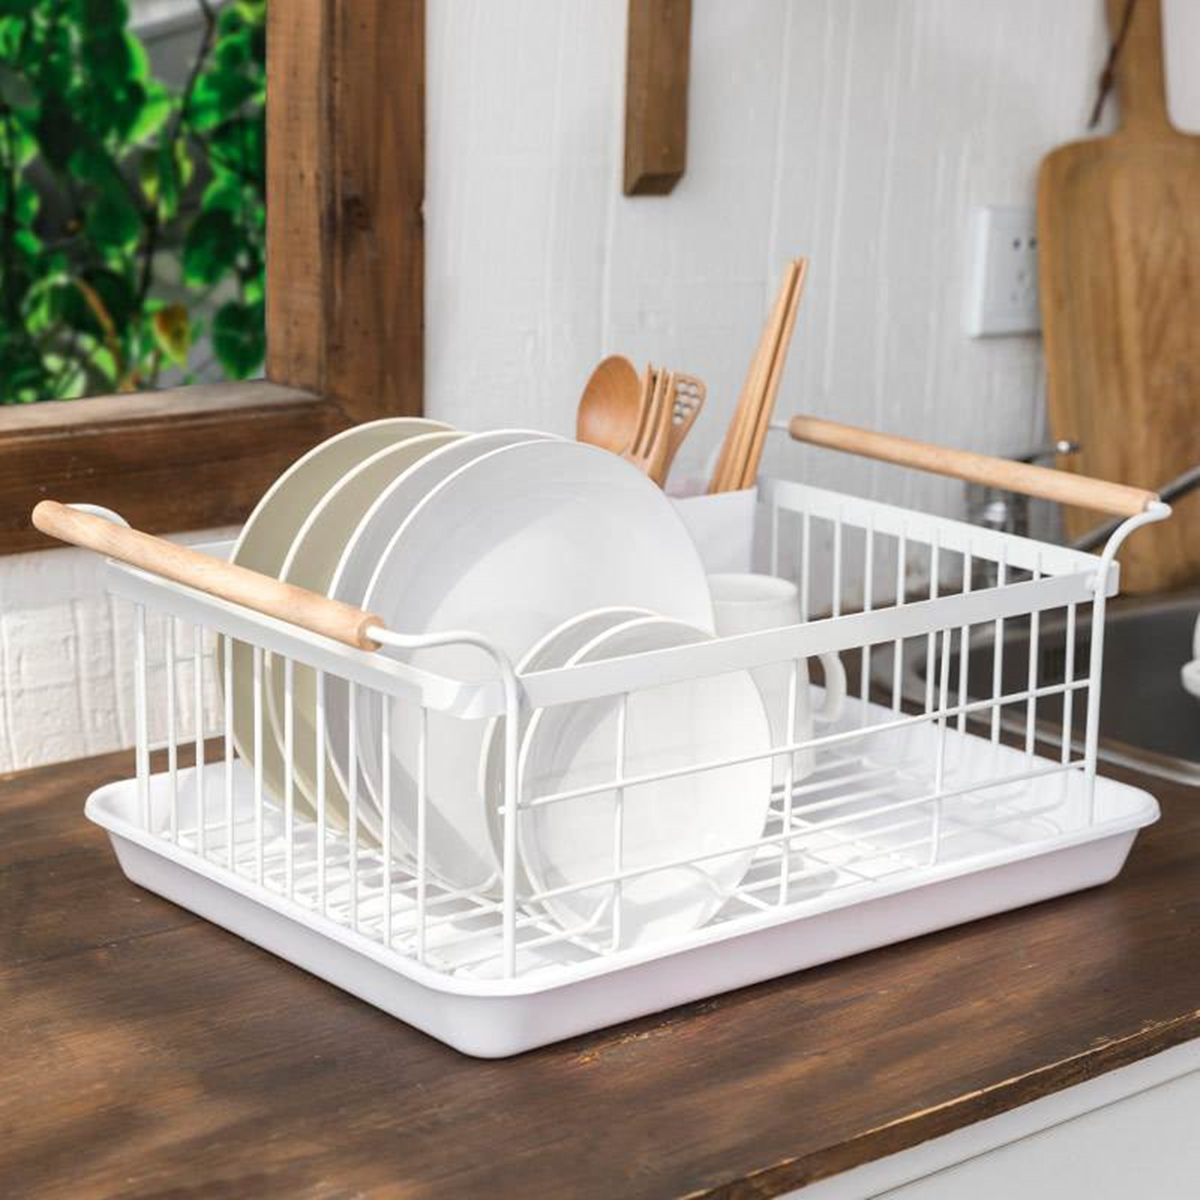 Dish-Drainer-Kitchen-Drying-Rack-Sink-Tableware-Bowl-Storage-Basket-Cup-Holder-Drain-Shelf-1545483